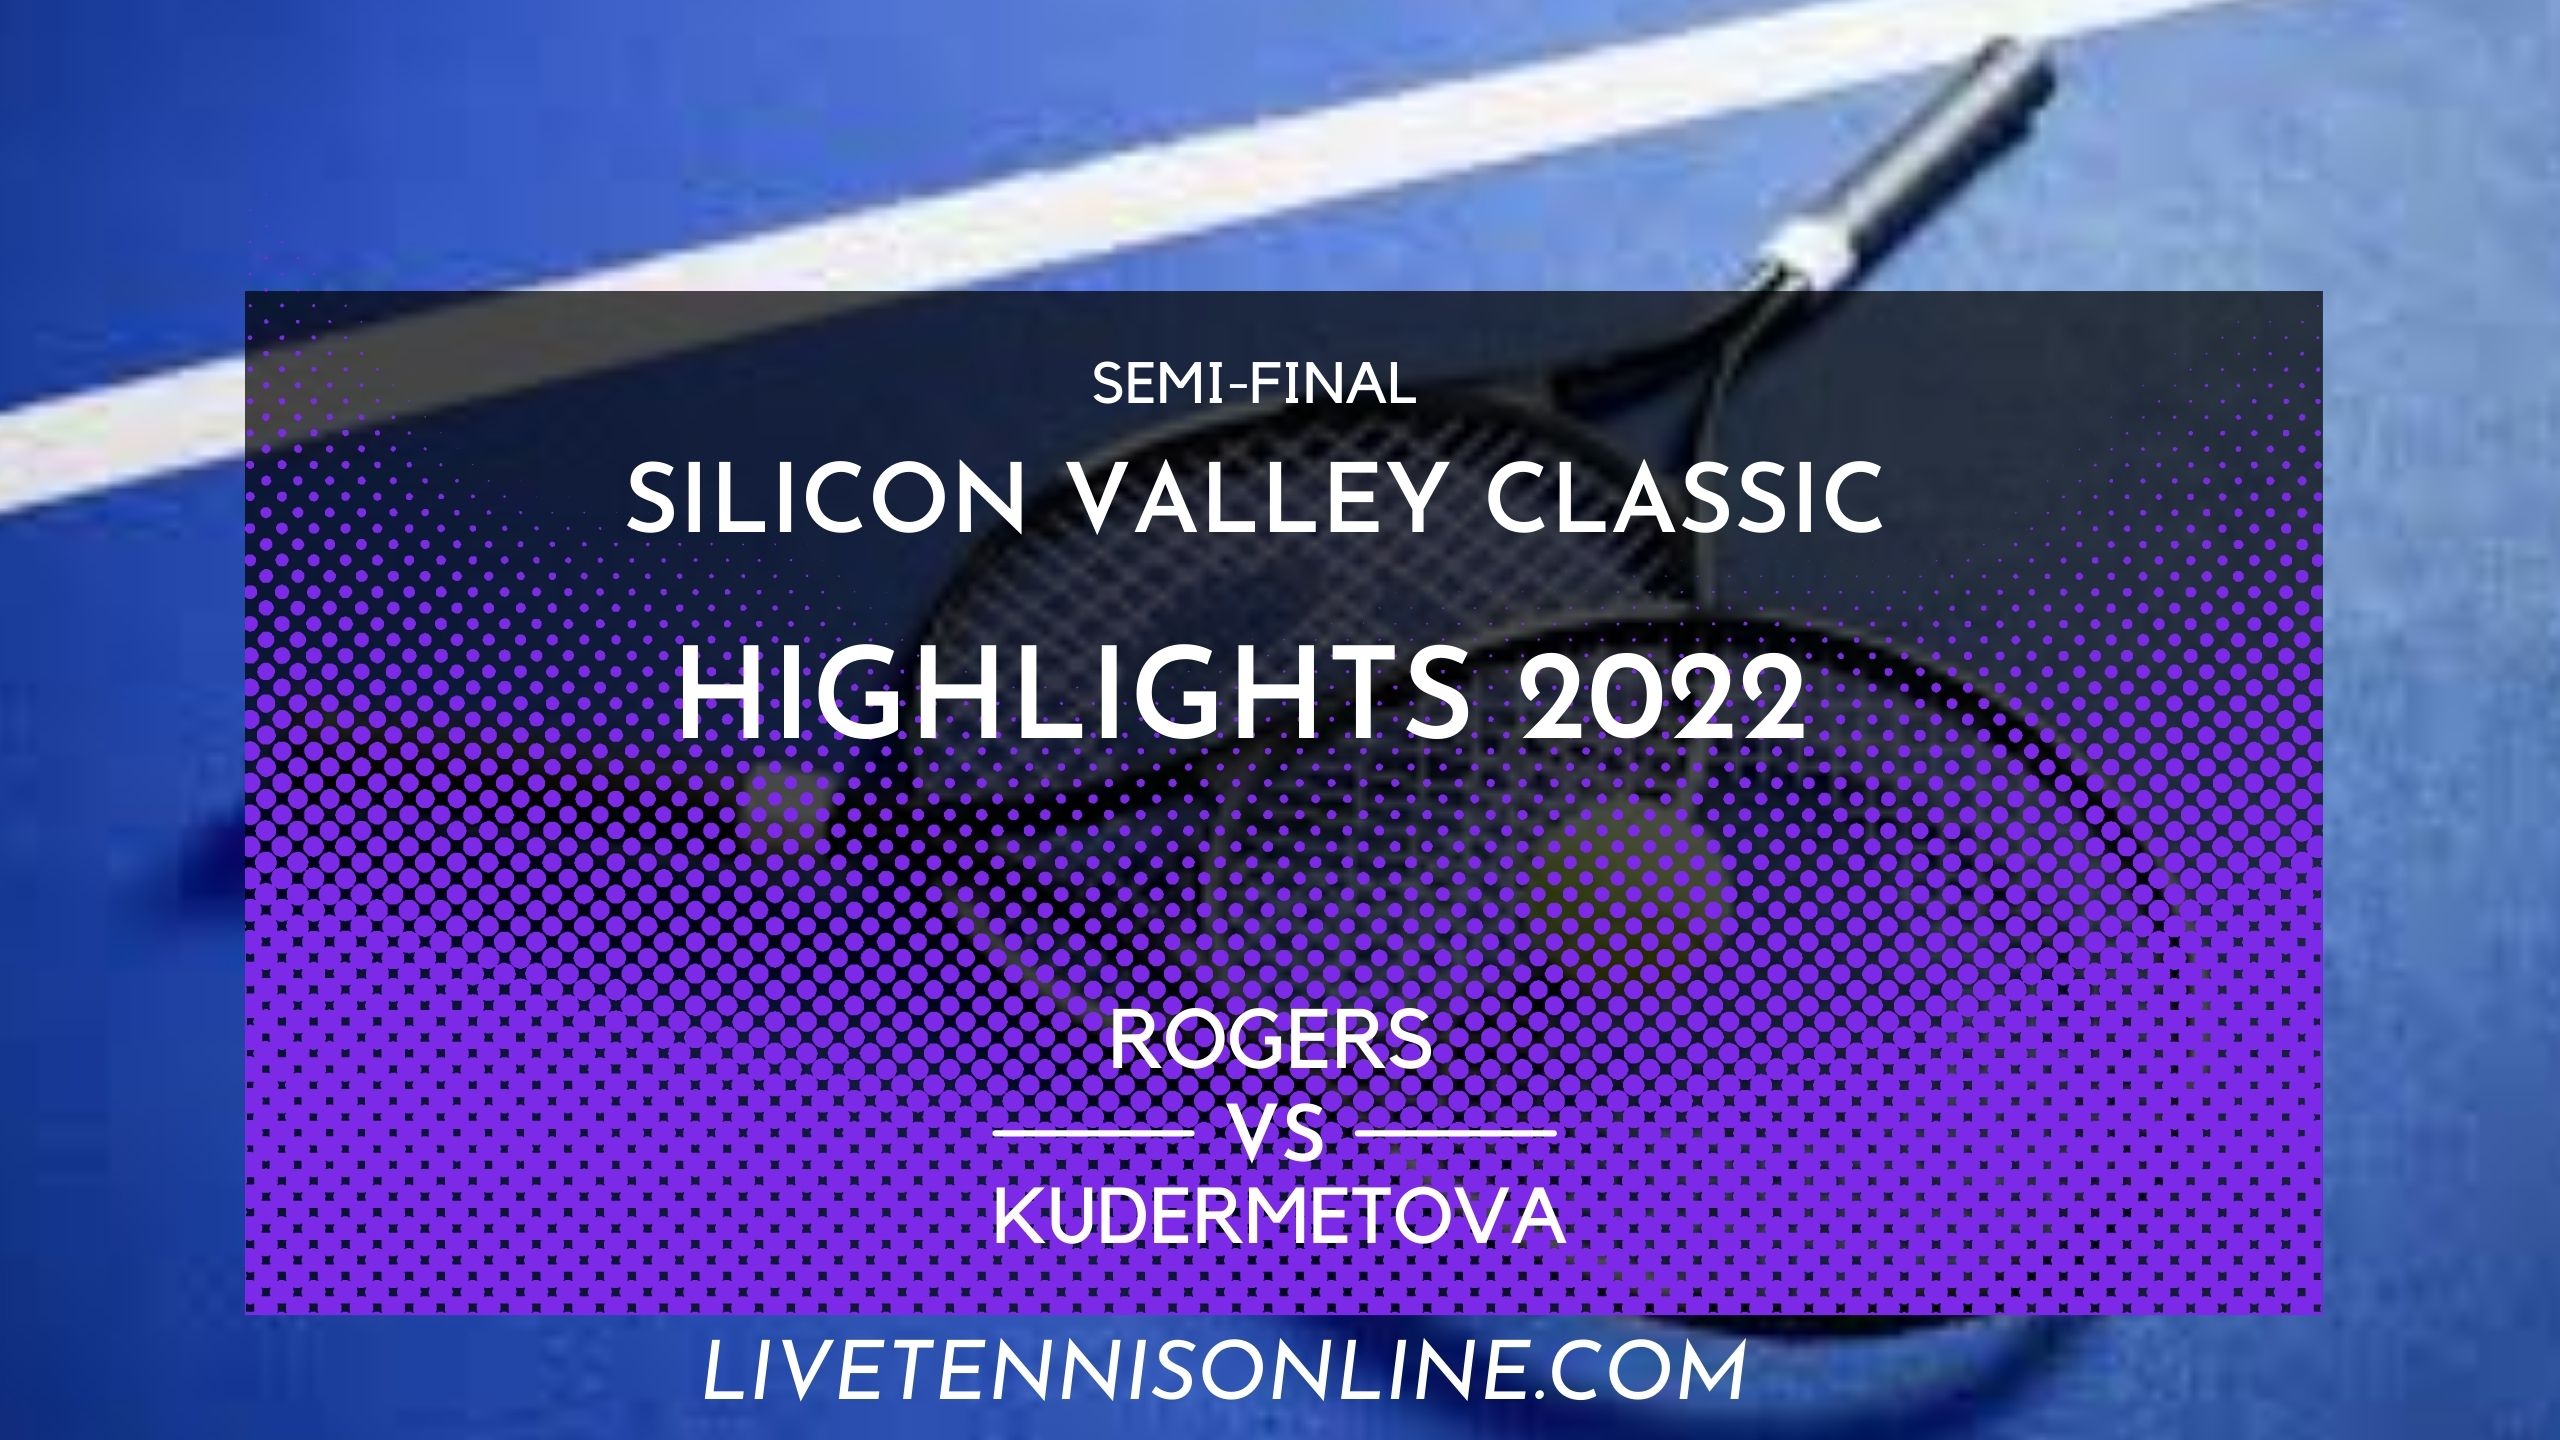 Rogers Vs Kudermetova SF Highlights 2022 Silicon Valley Classic